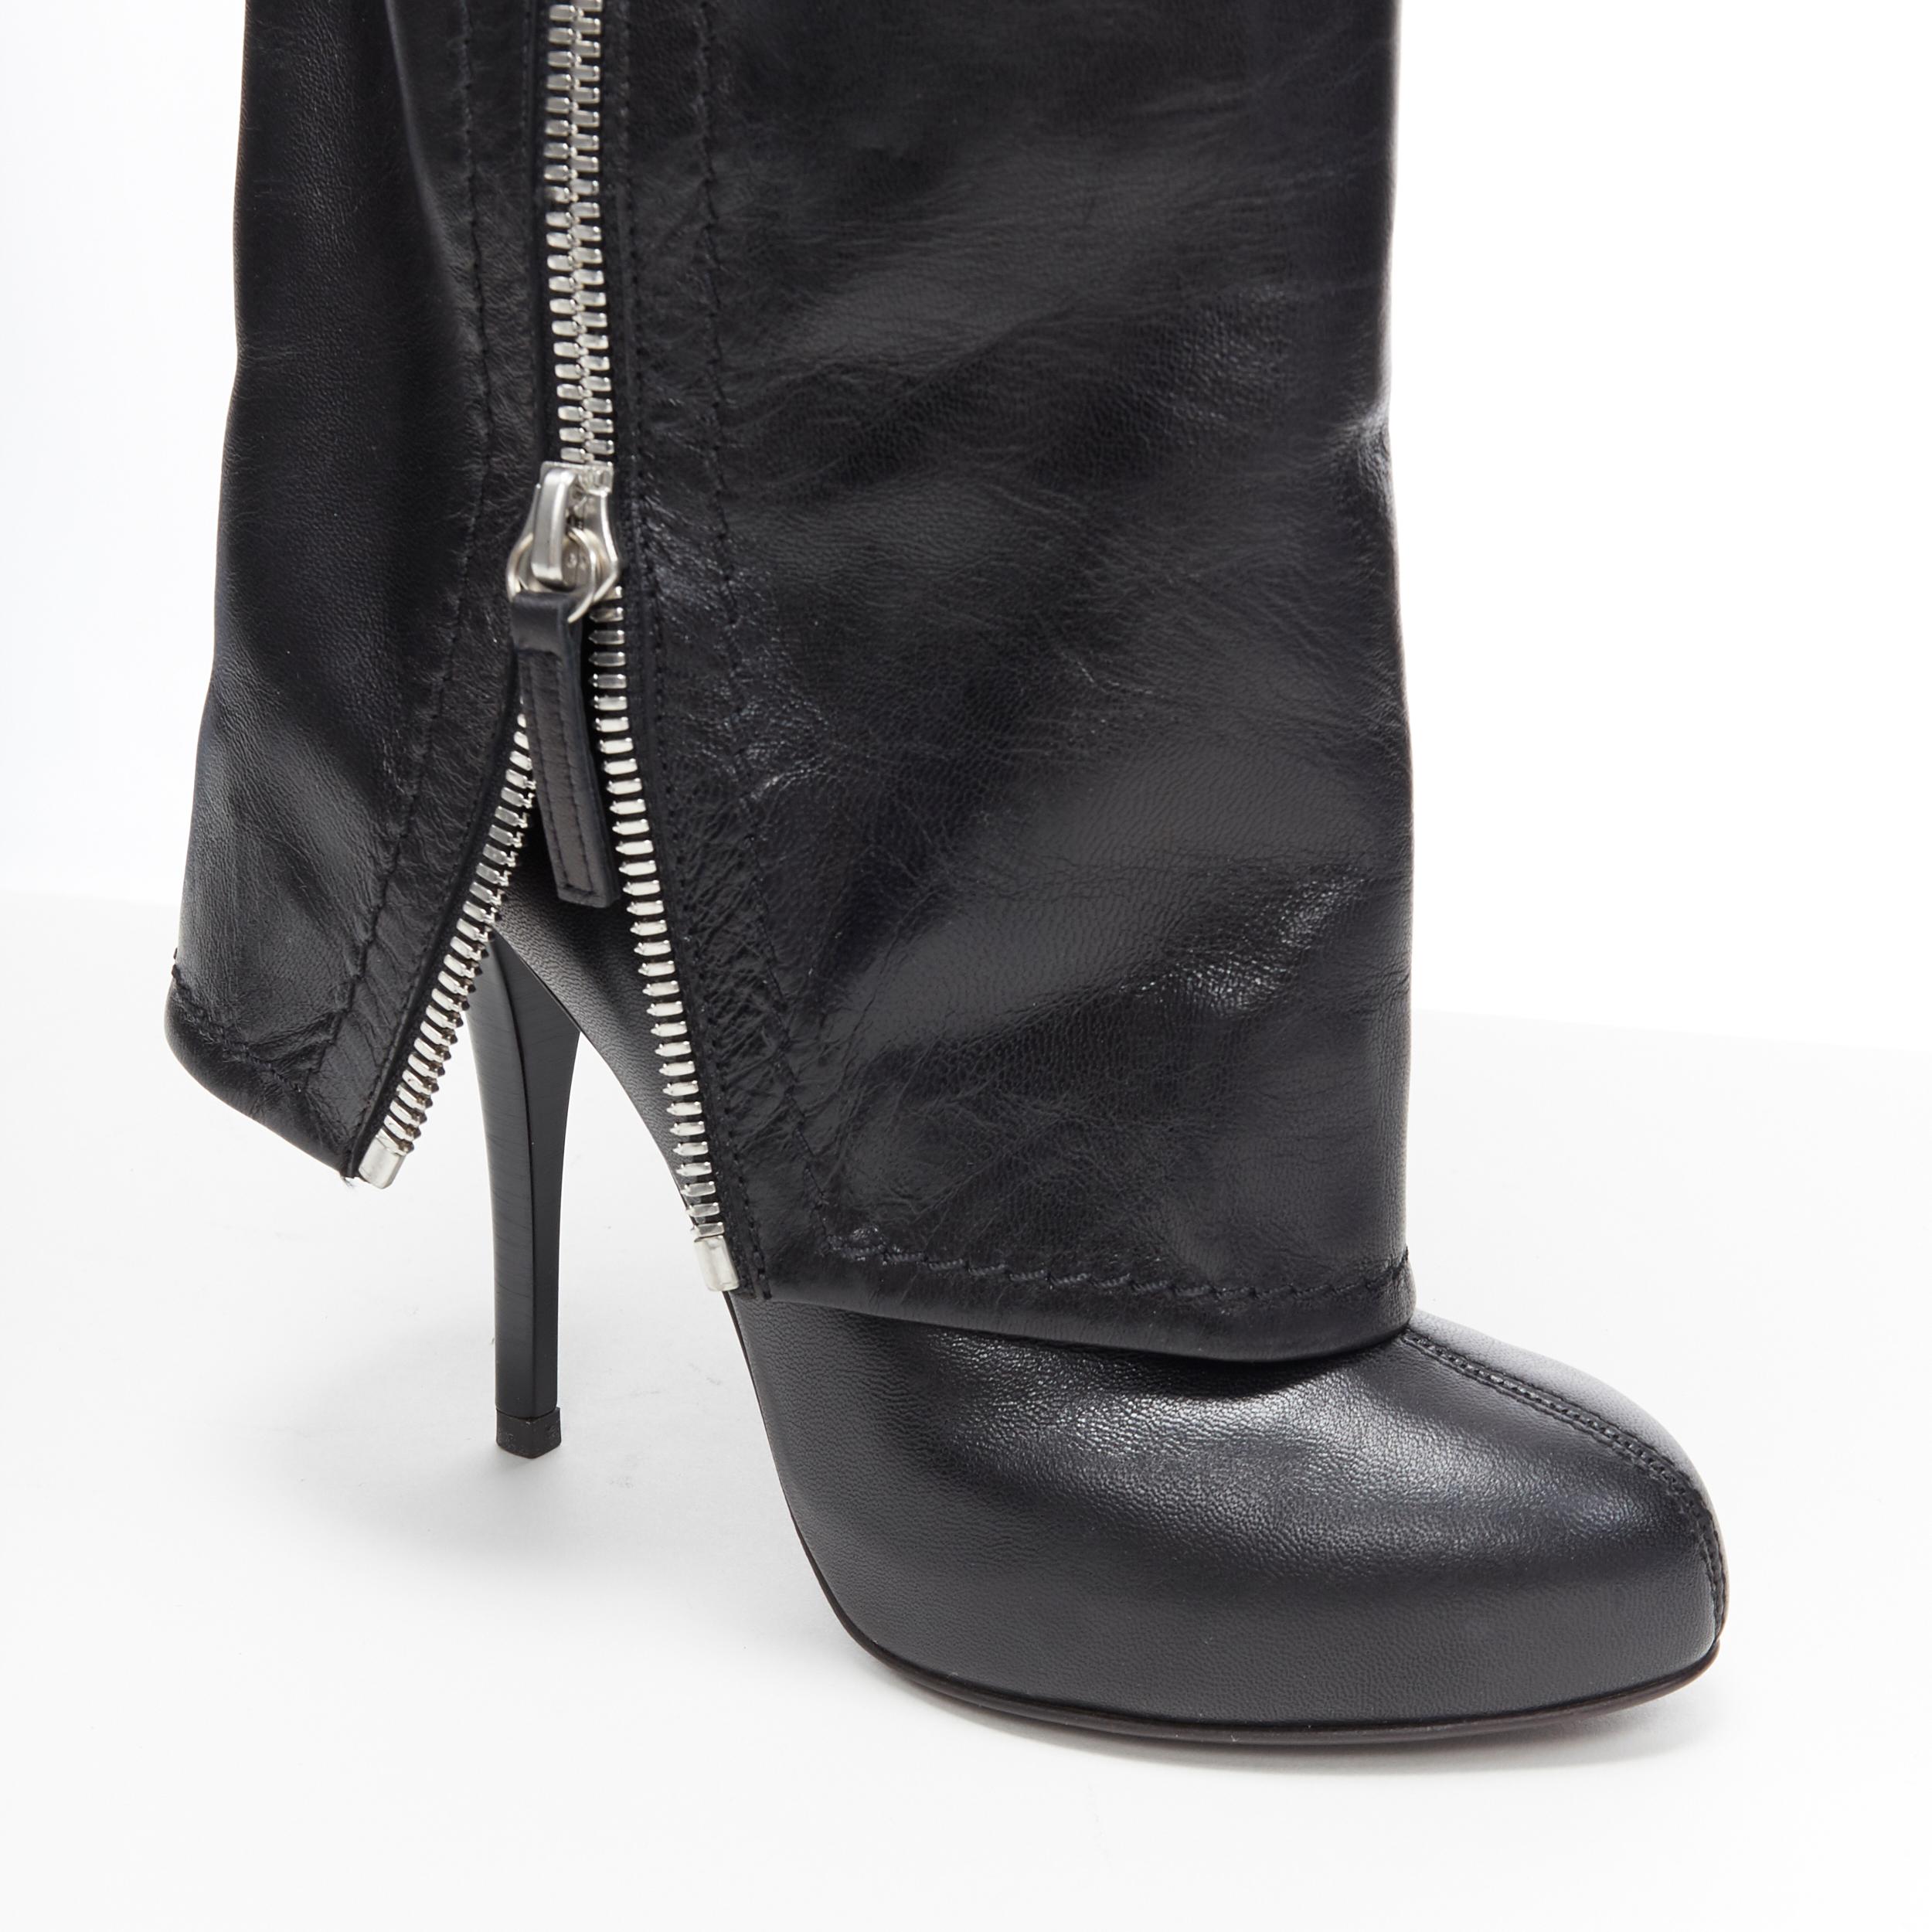 new GIUSEPPE ZANOTTI black leather zipper foldover pant high heel boot EU36 3